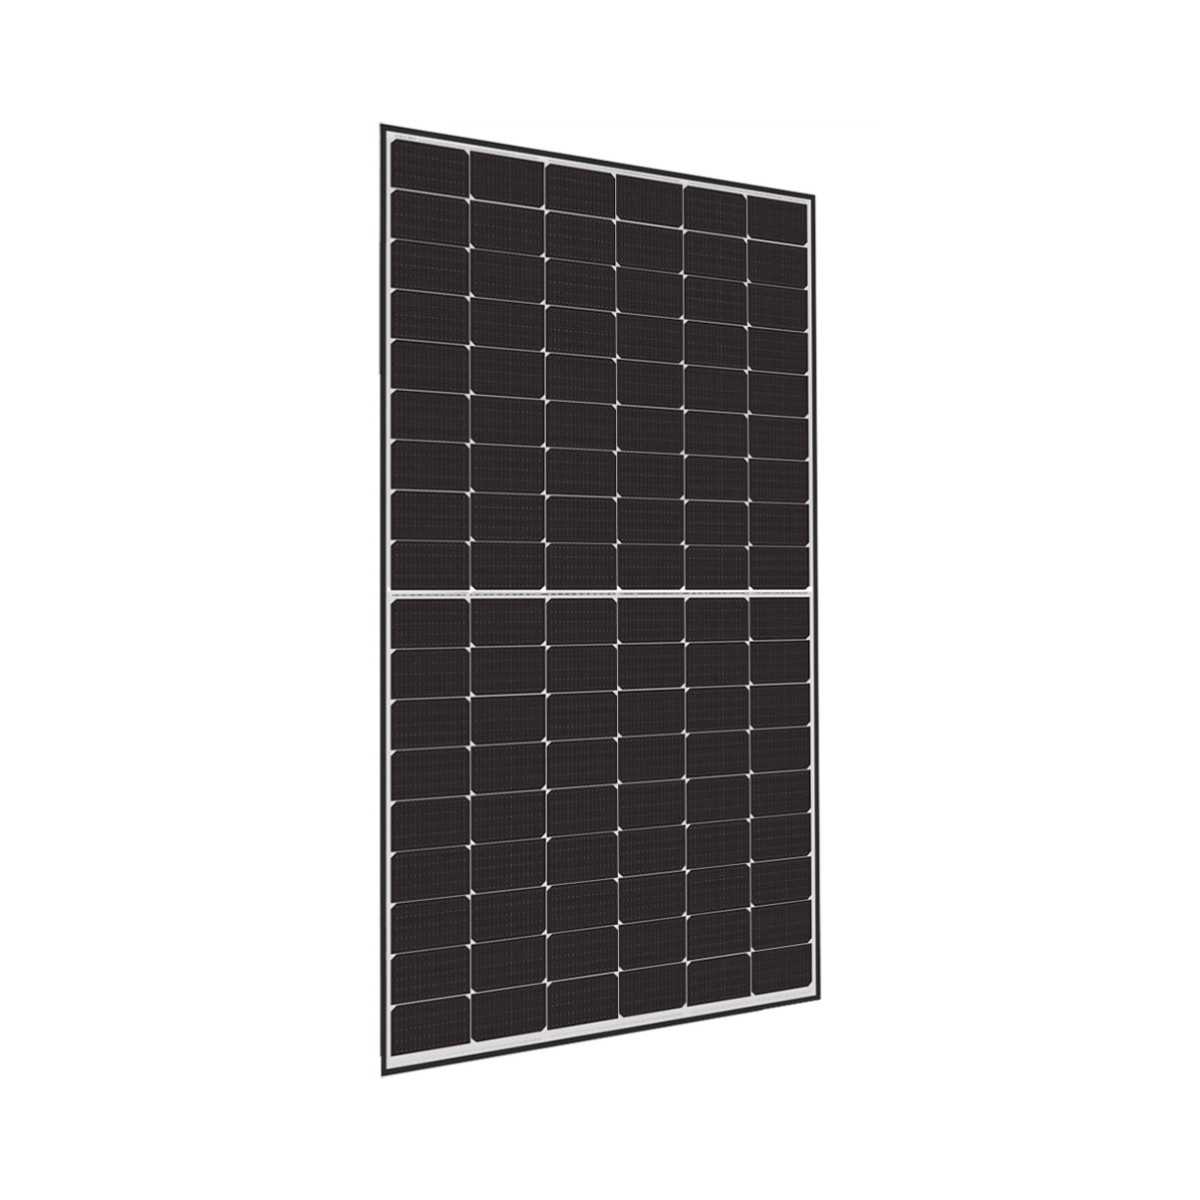 Jinko Tiger Neo N-Type 425W monocrystalline solar panel OF016390